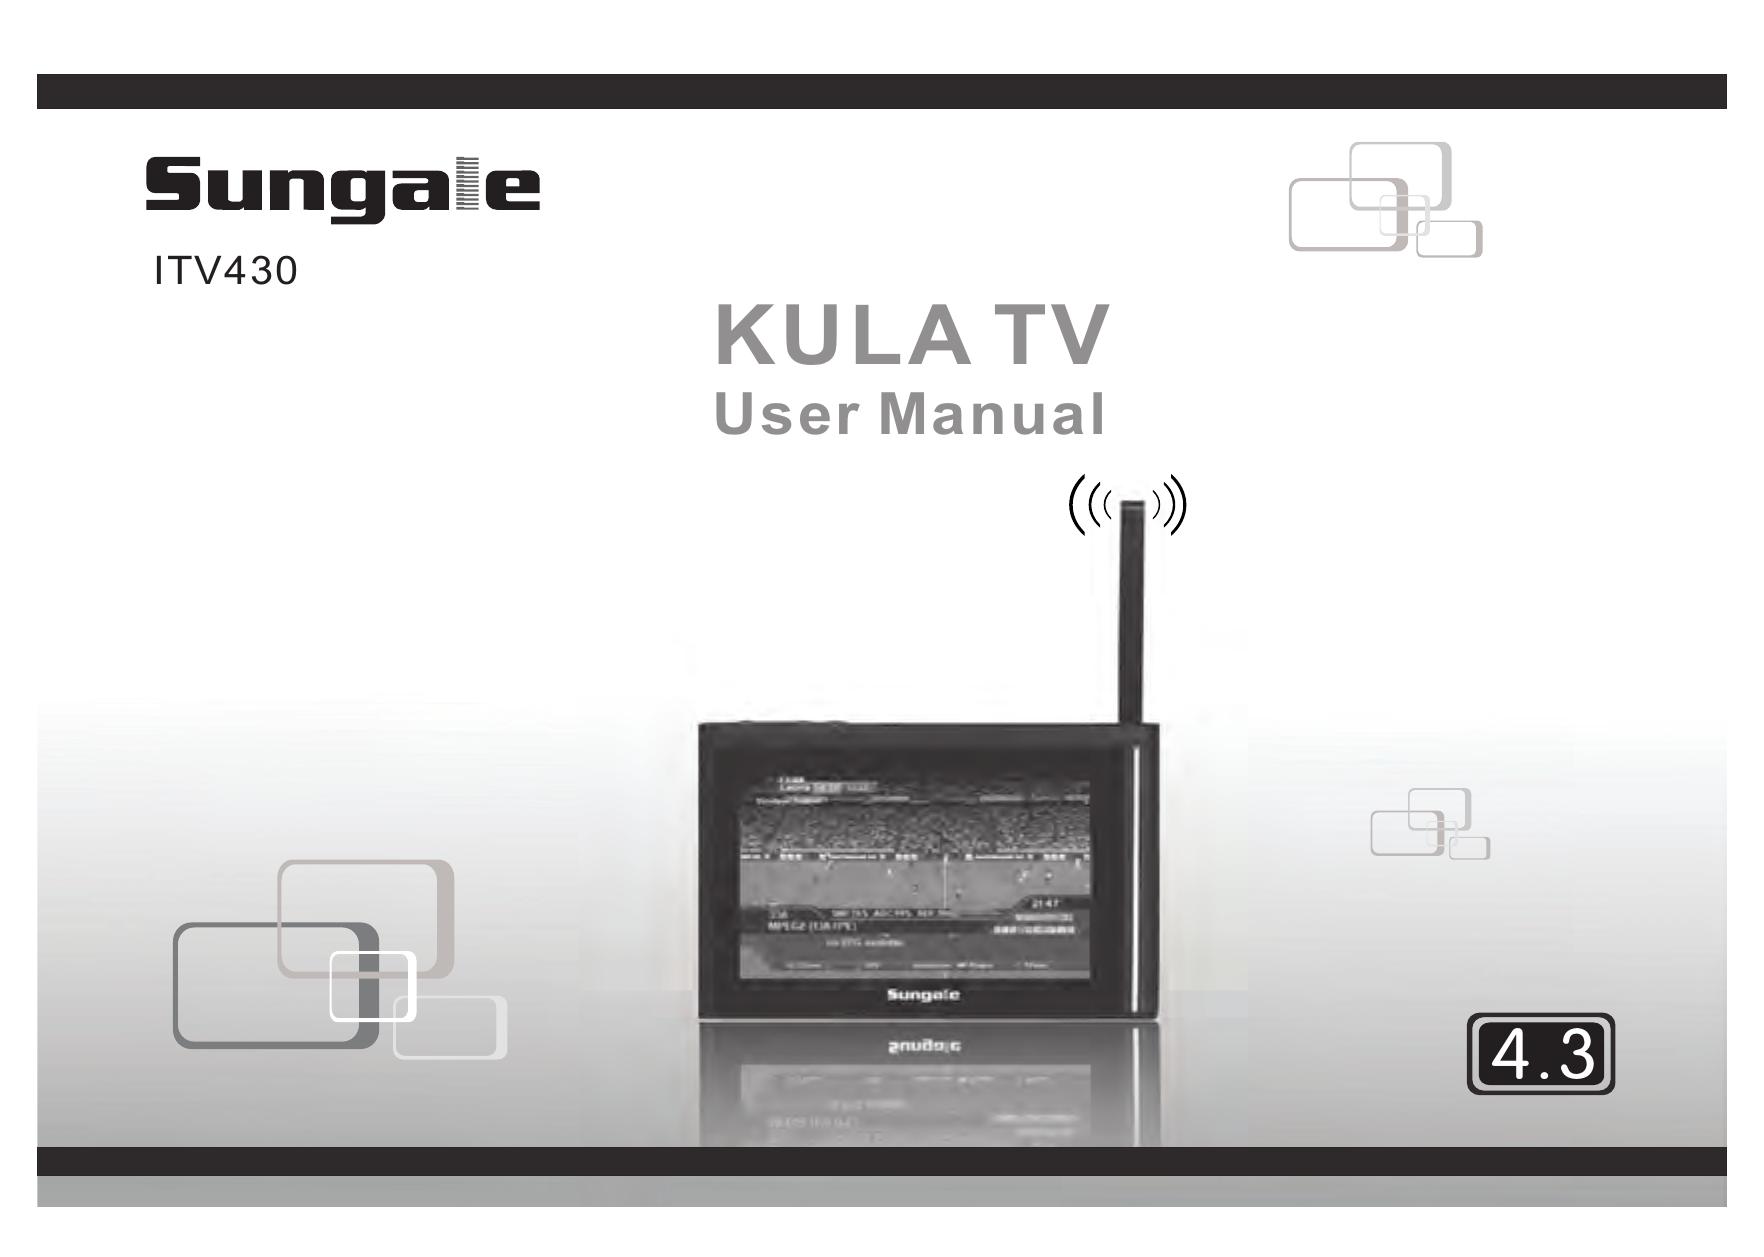 Sungale ITV430 Handheld TV User Manual